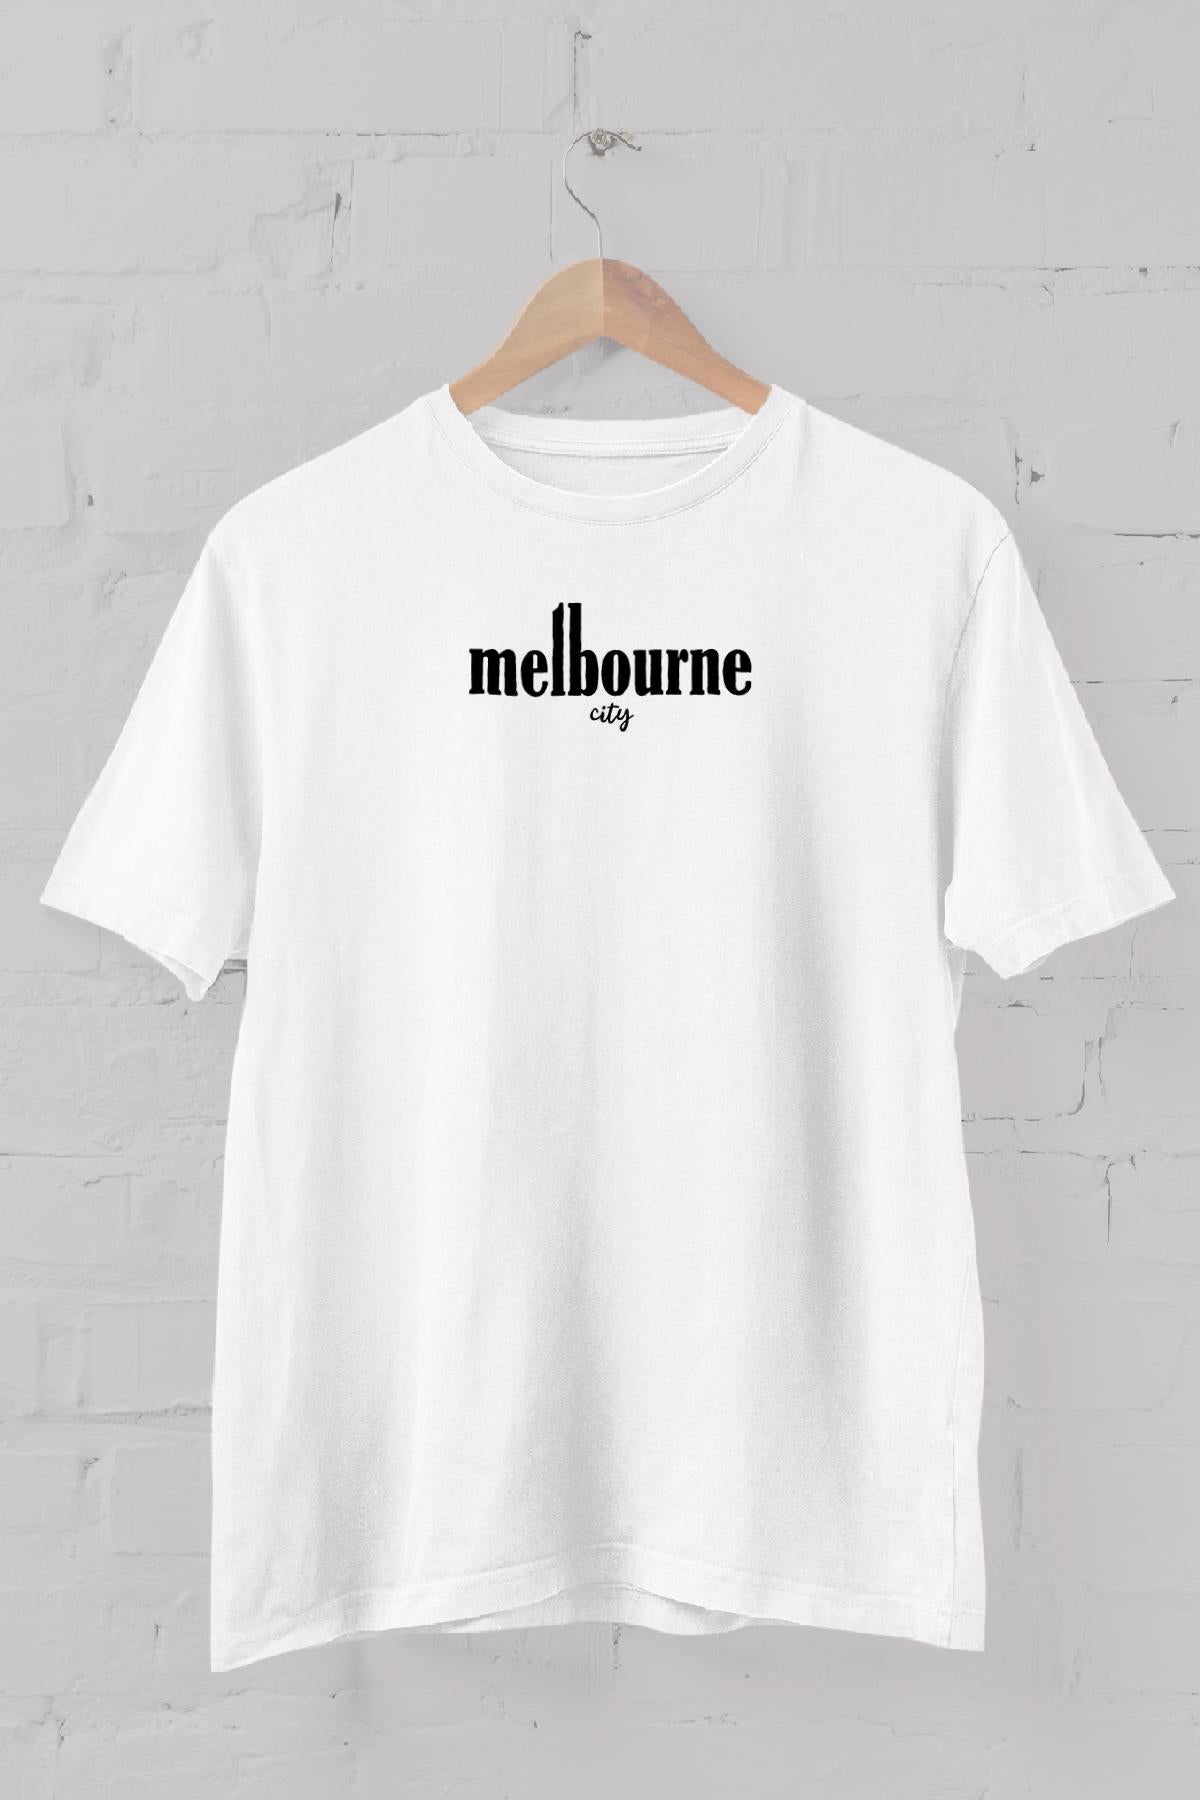 Melbourne printed Crew Neck men's t -shirt